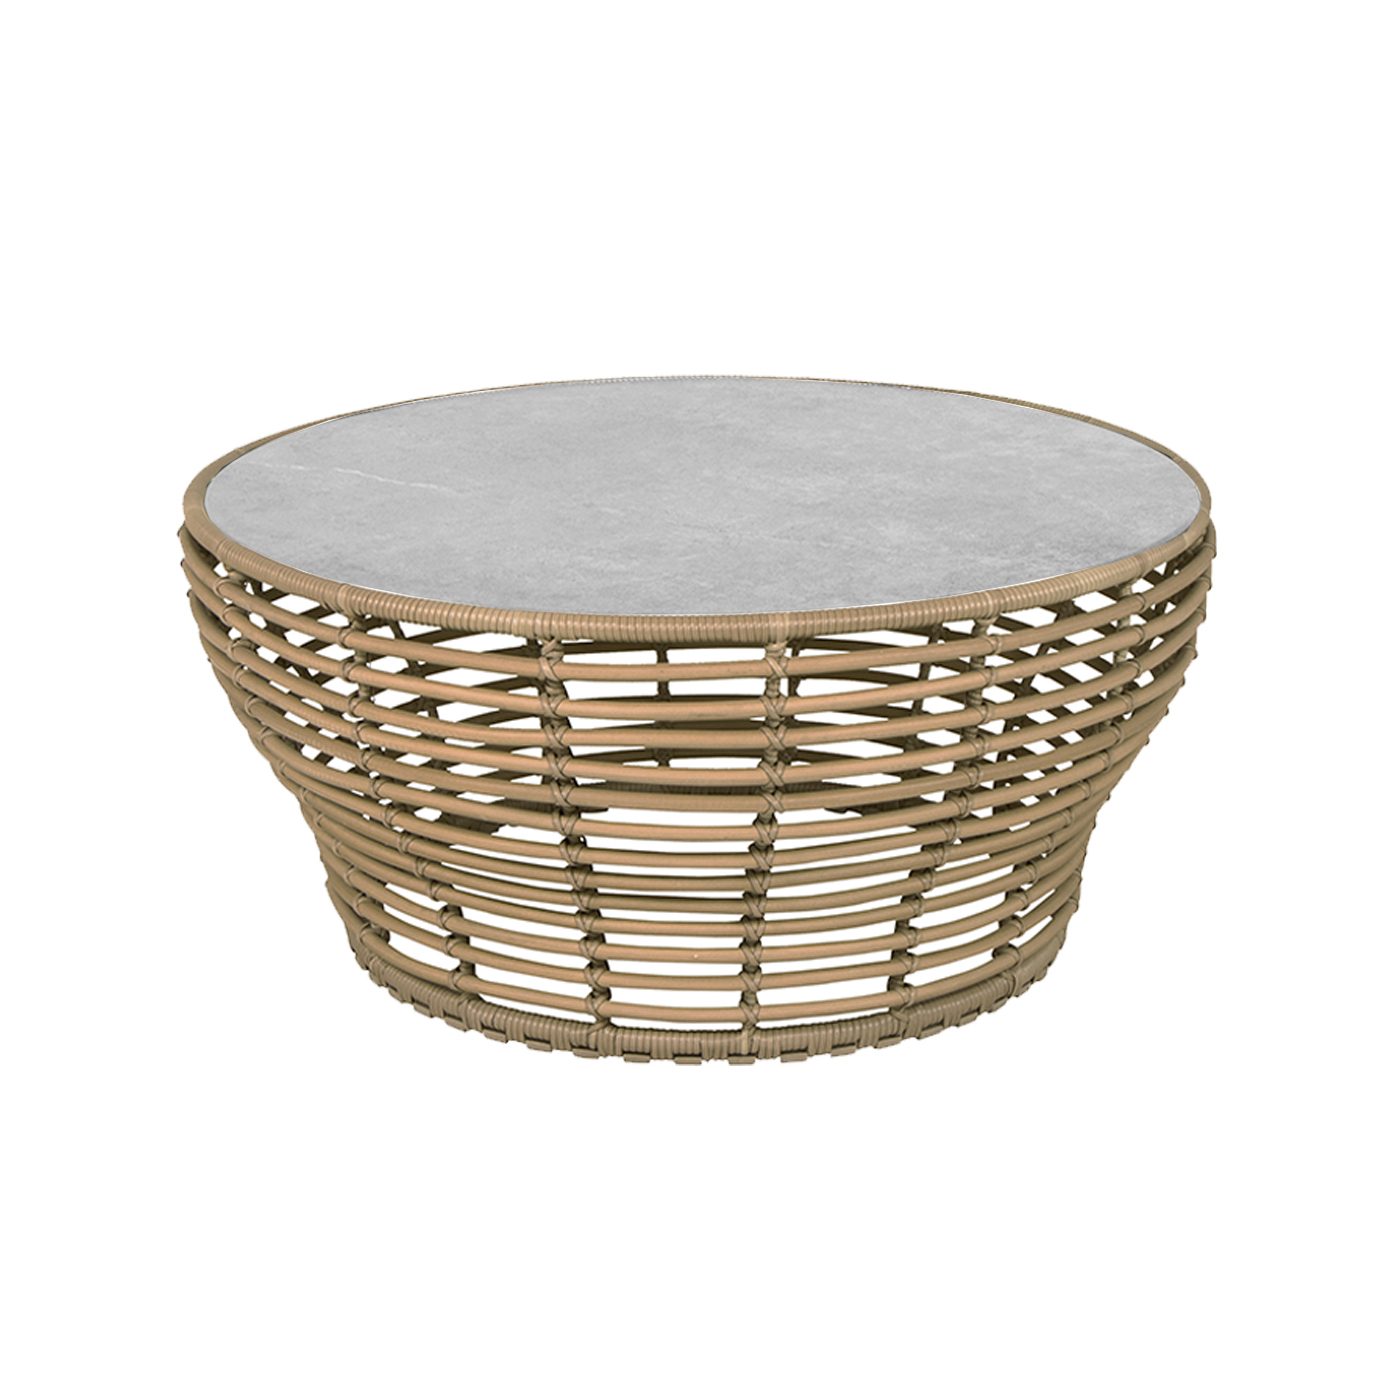 Cane-line "Basket" Loungetisch groß, Geflecht natur, Tischplatte Keramik grau, Ø 95 cm